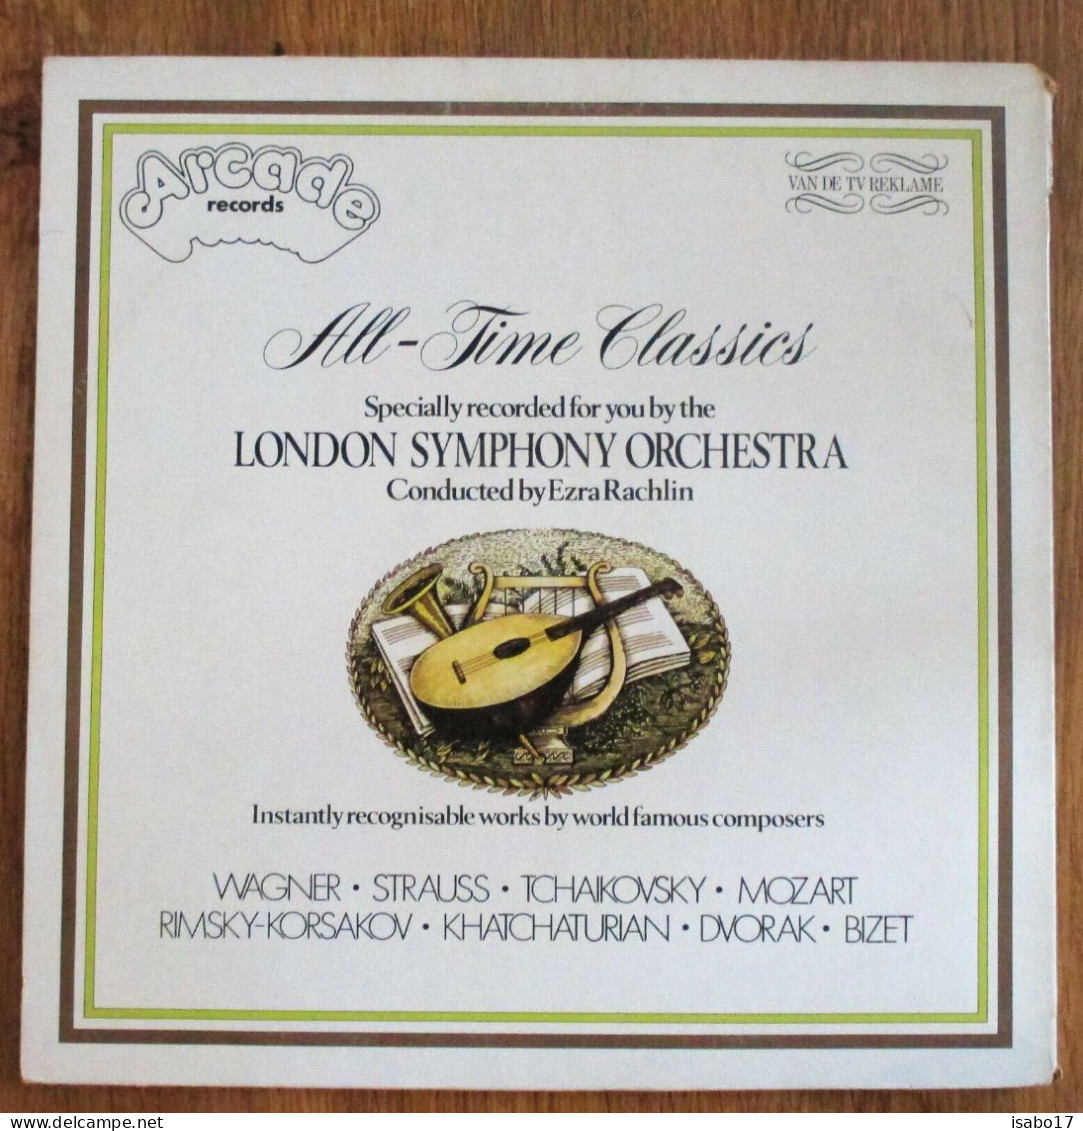 All-Time Classics [Vinyl LP] - Opera / Operette